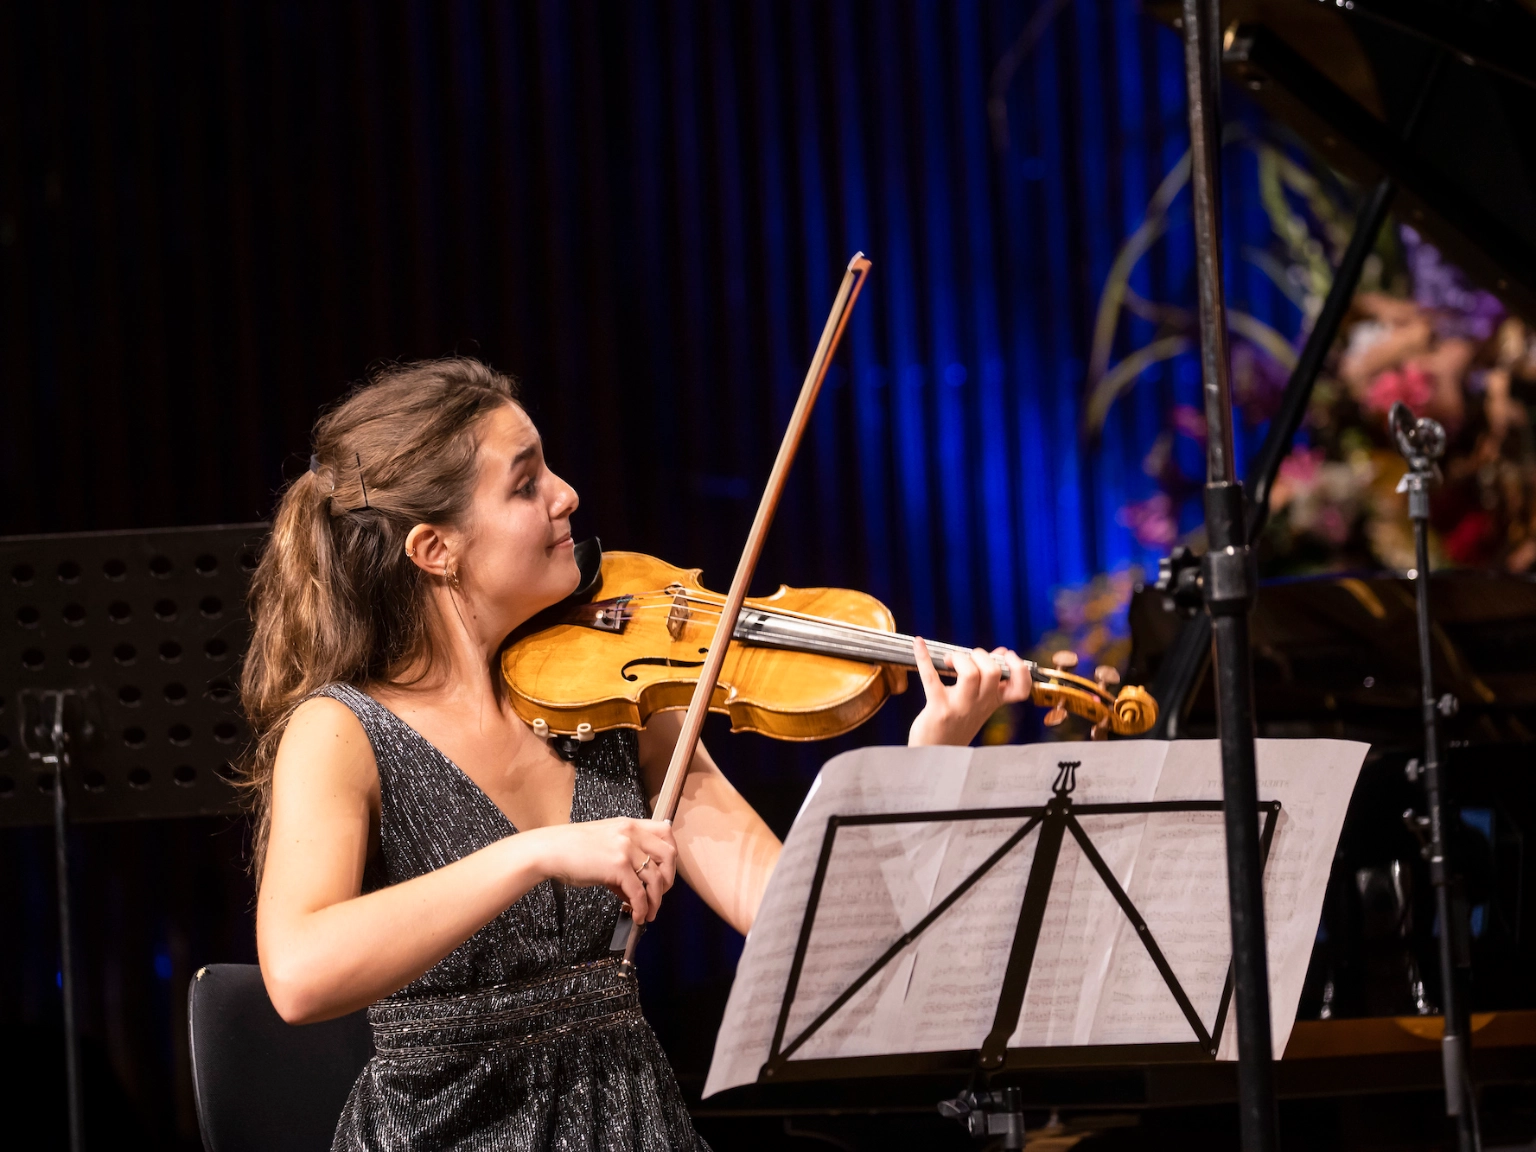 Joseph Joachim Violinwettbewerb 2021: Konzert Chiara Sannicandro, Semifinale am 07.10.2021